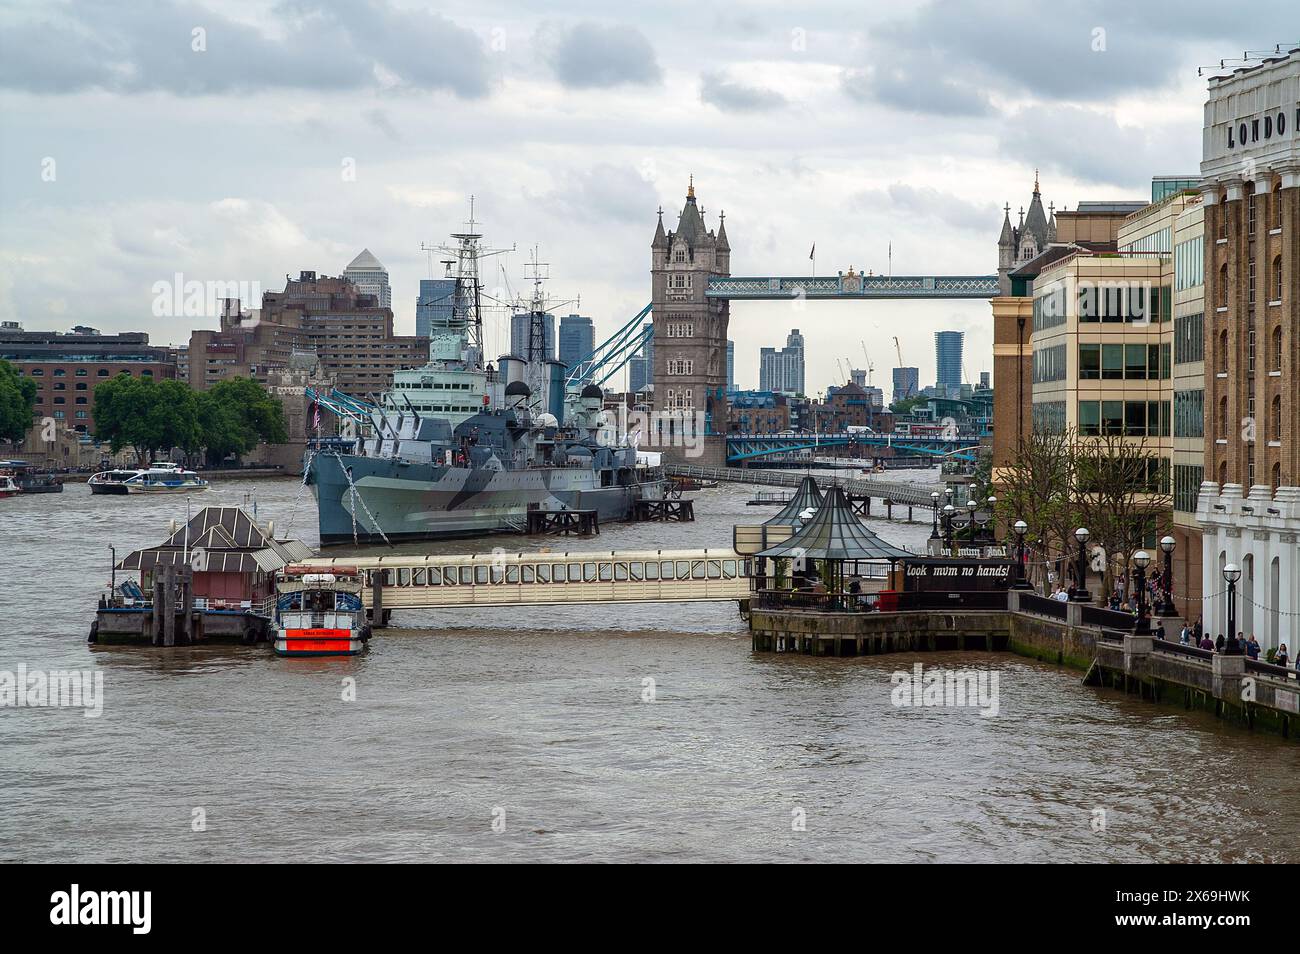 Inghilterra Regno Unito; fiume Tamigi; London Bridge City Pier; HMS Belfast; Tower Bridge; storico incrociatore della Royal Navy classe Town; historischer Kreuzer Foto Stock